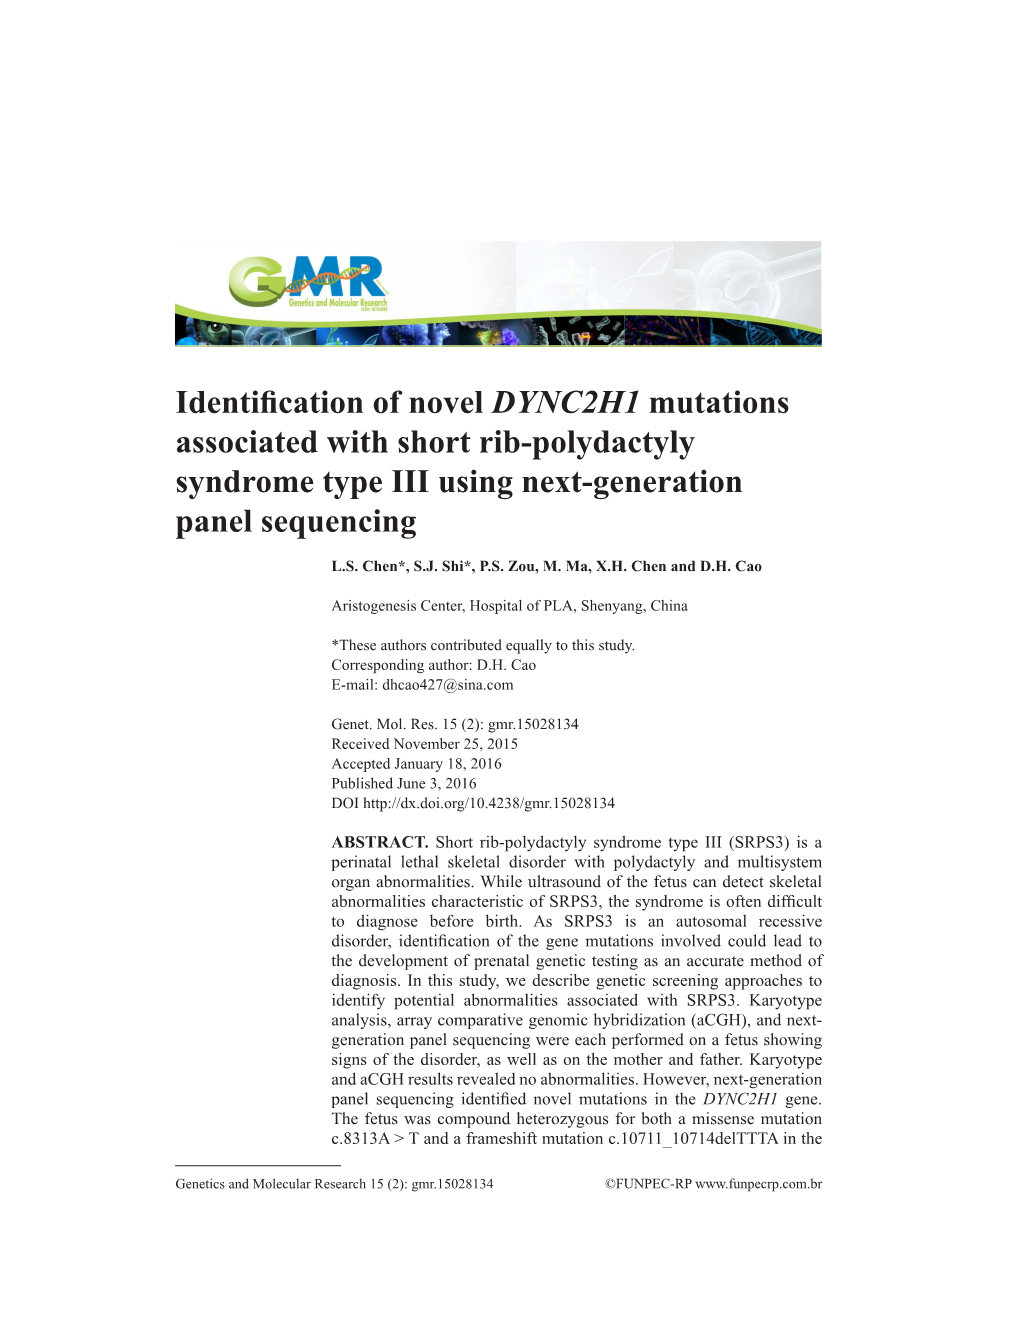 Identification of Novel DYNC2H1 Mutations Associated with Short Rib